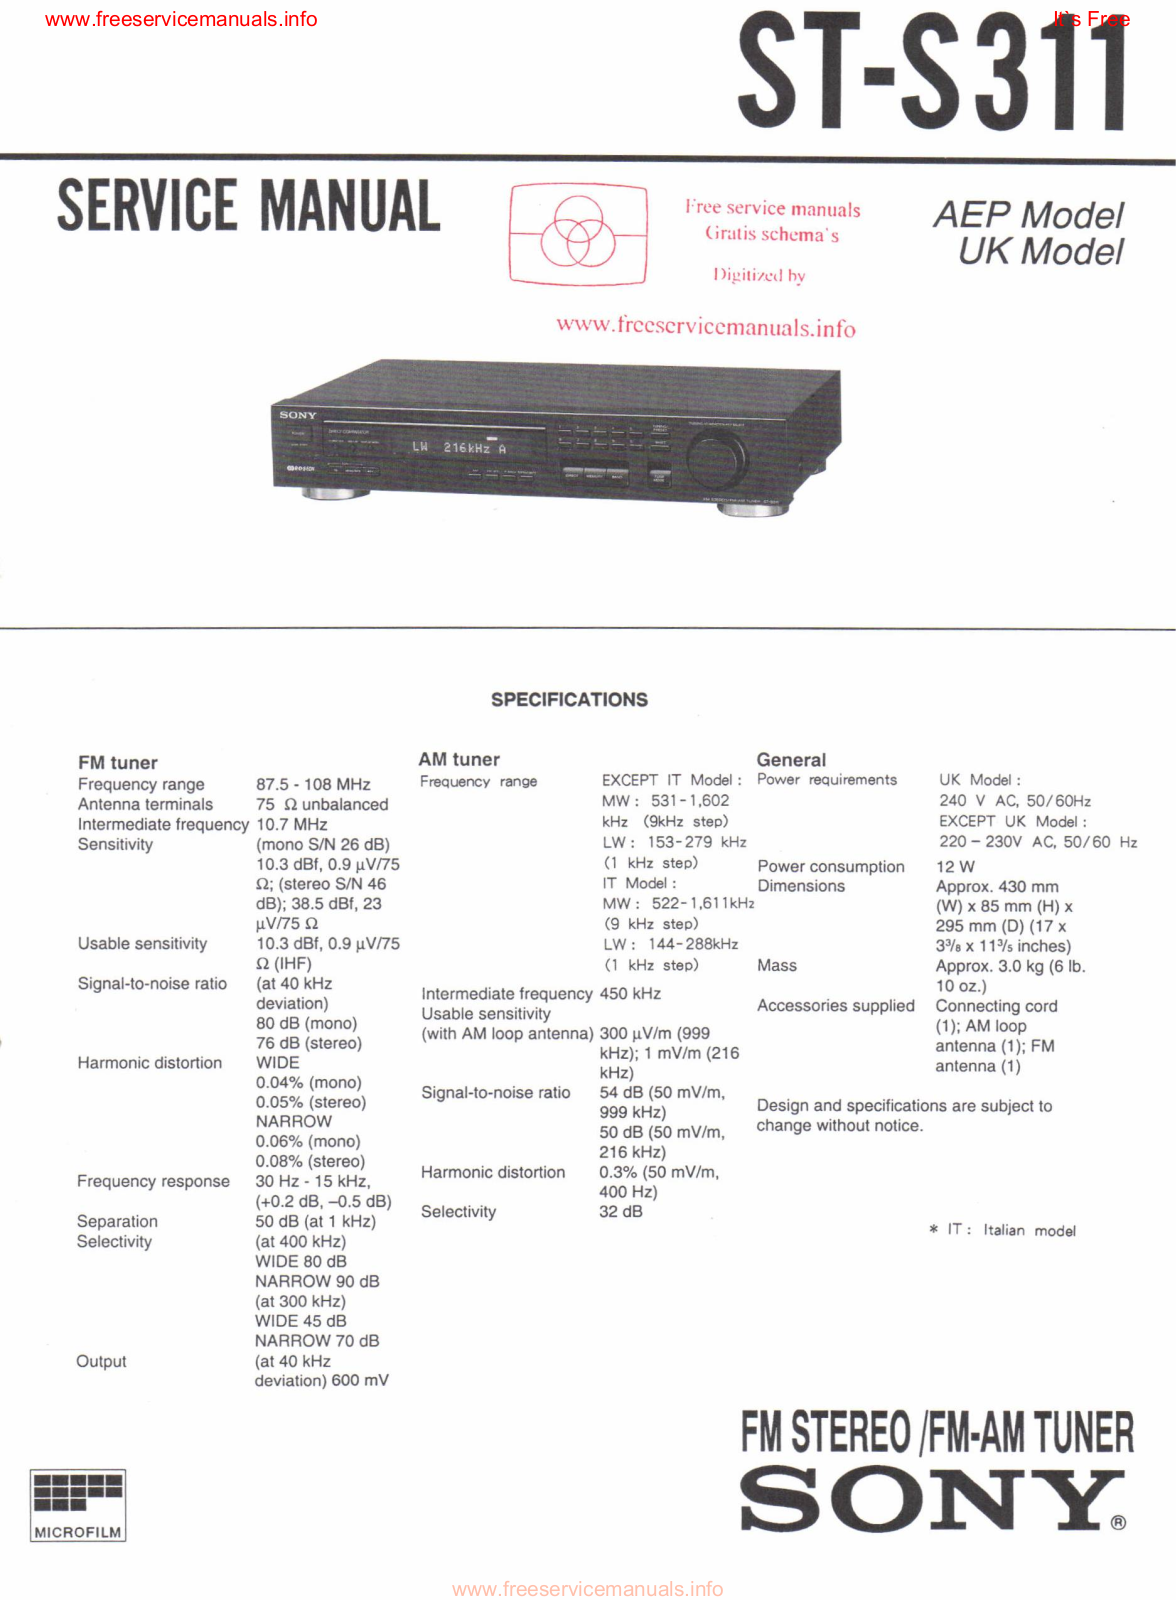 Sony ST-S311 Service Manual